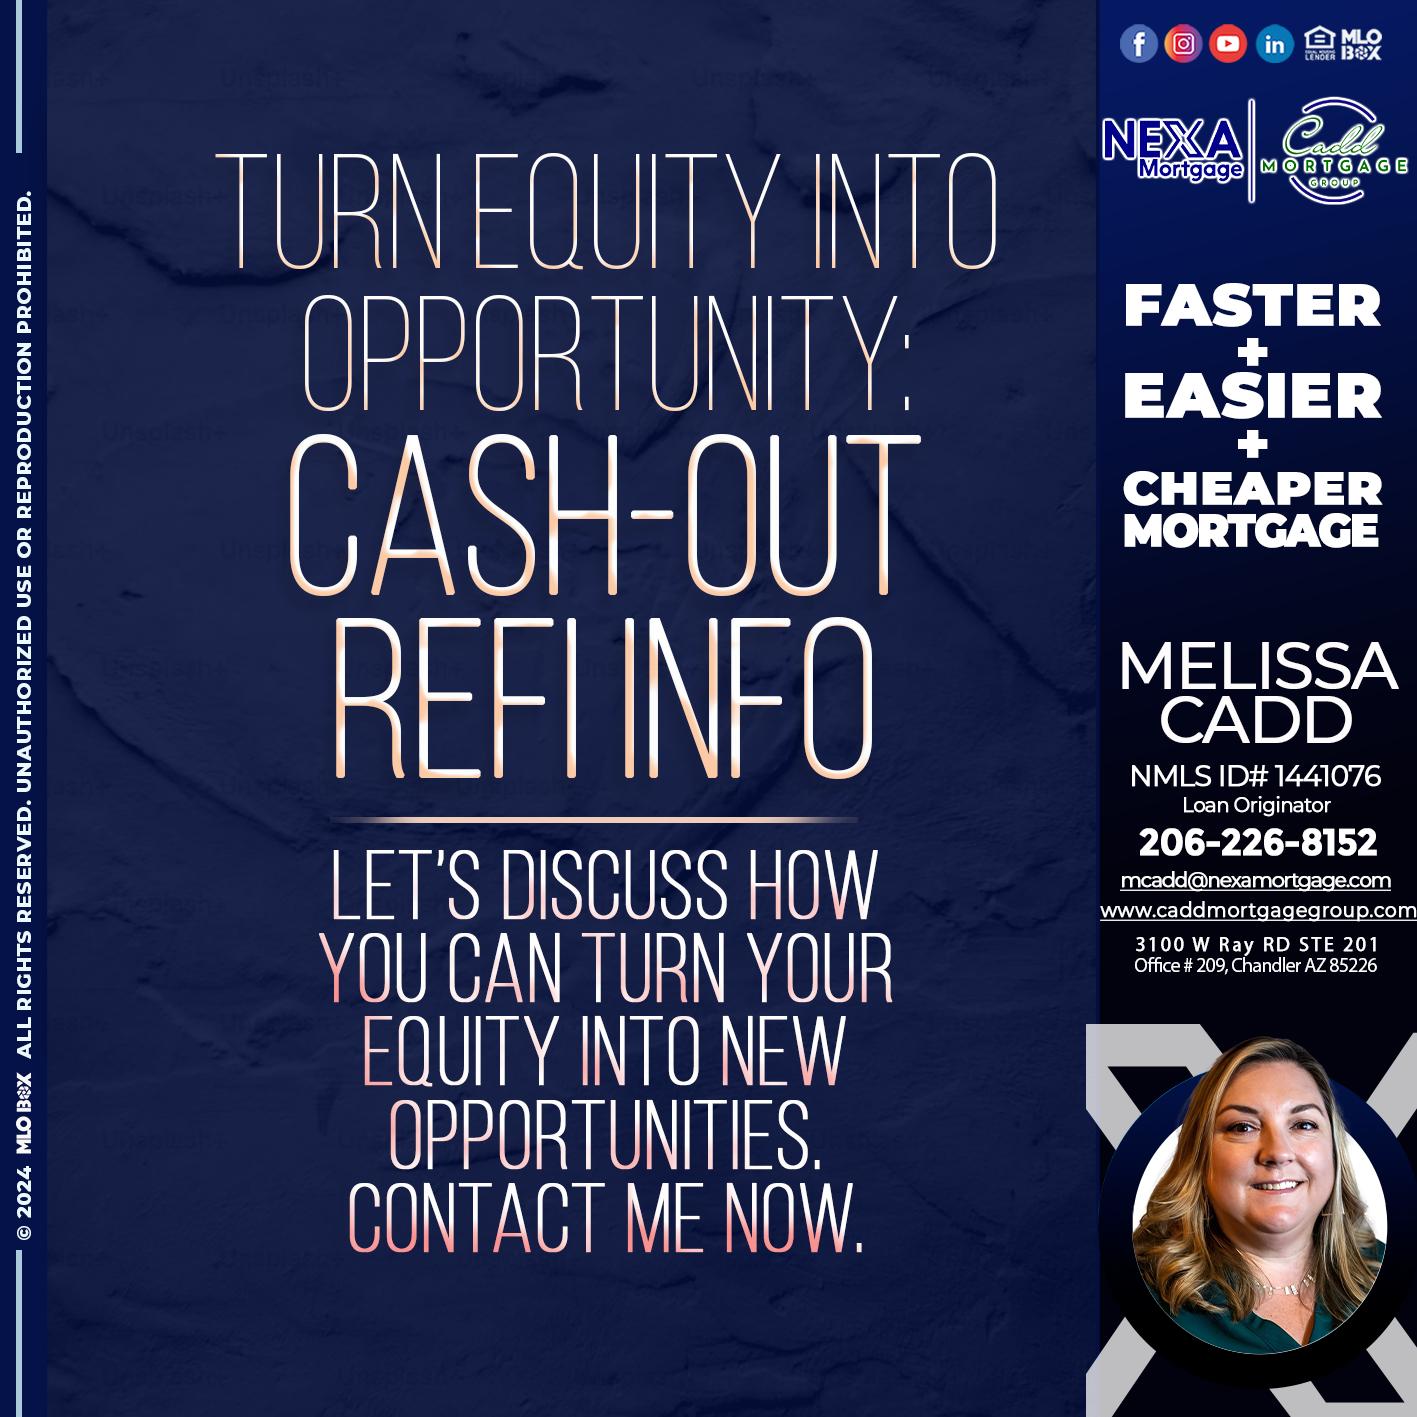 CASH OUT - Melissa Cadd -Loan Originator